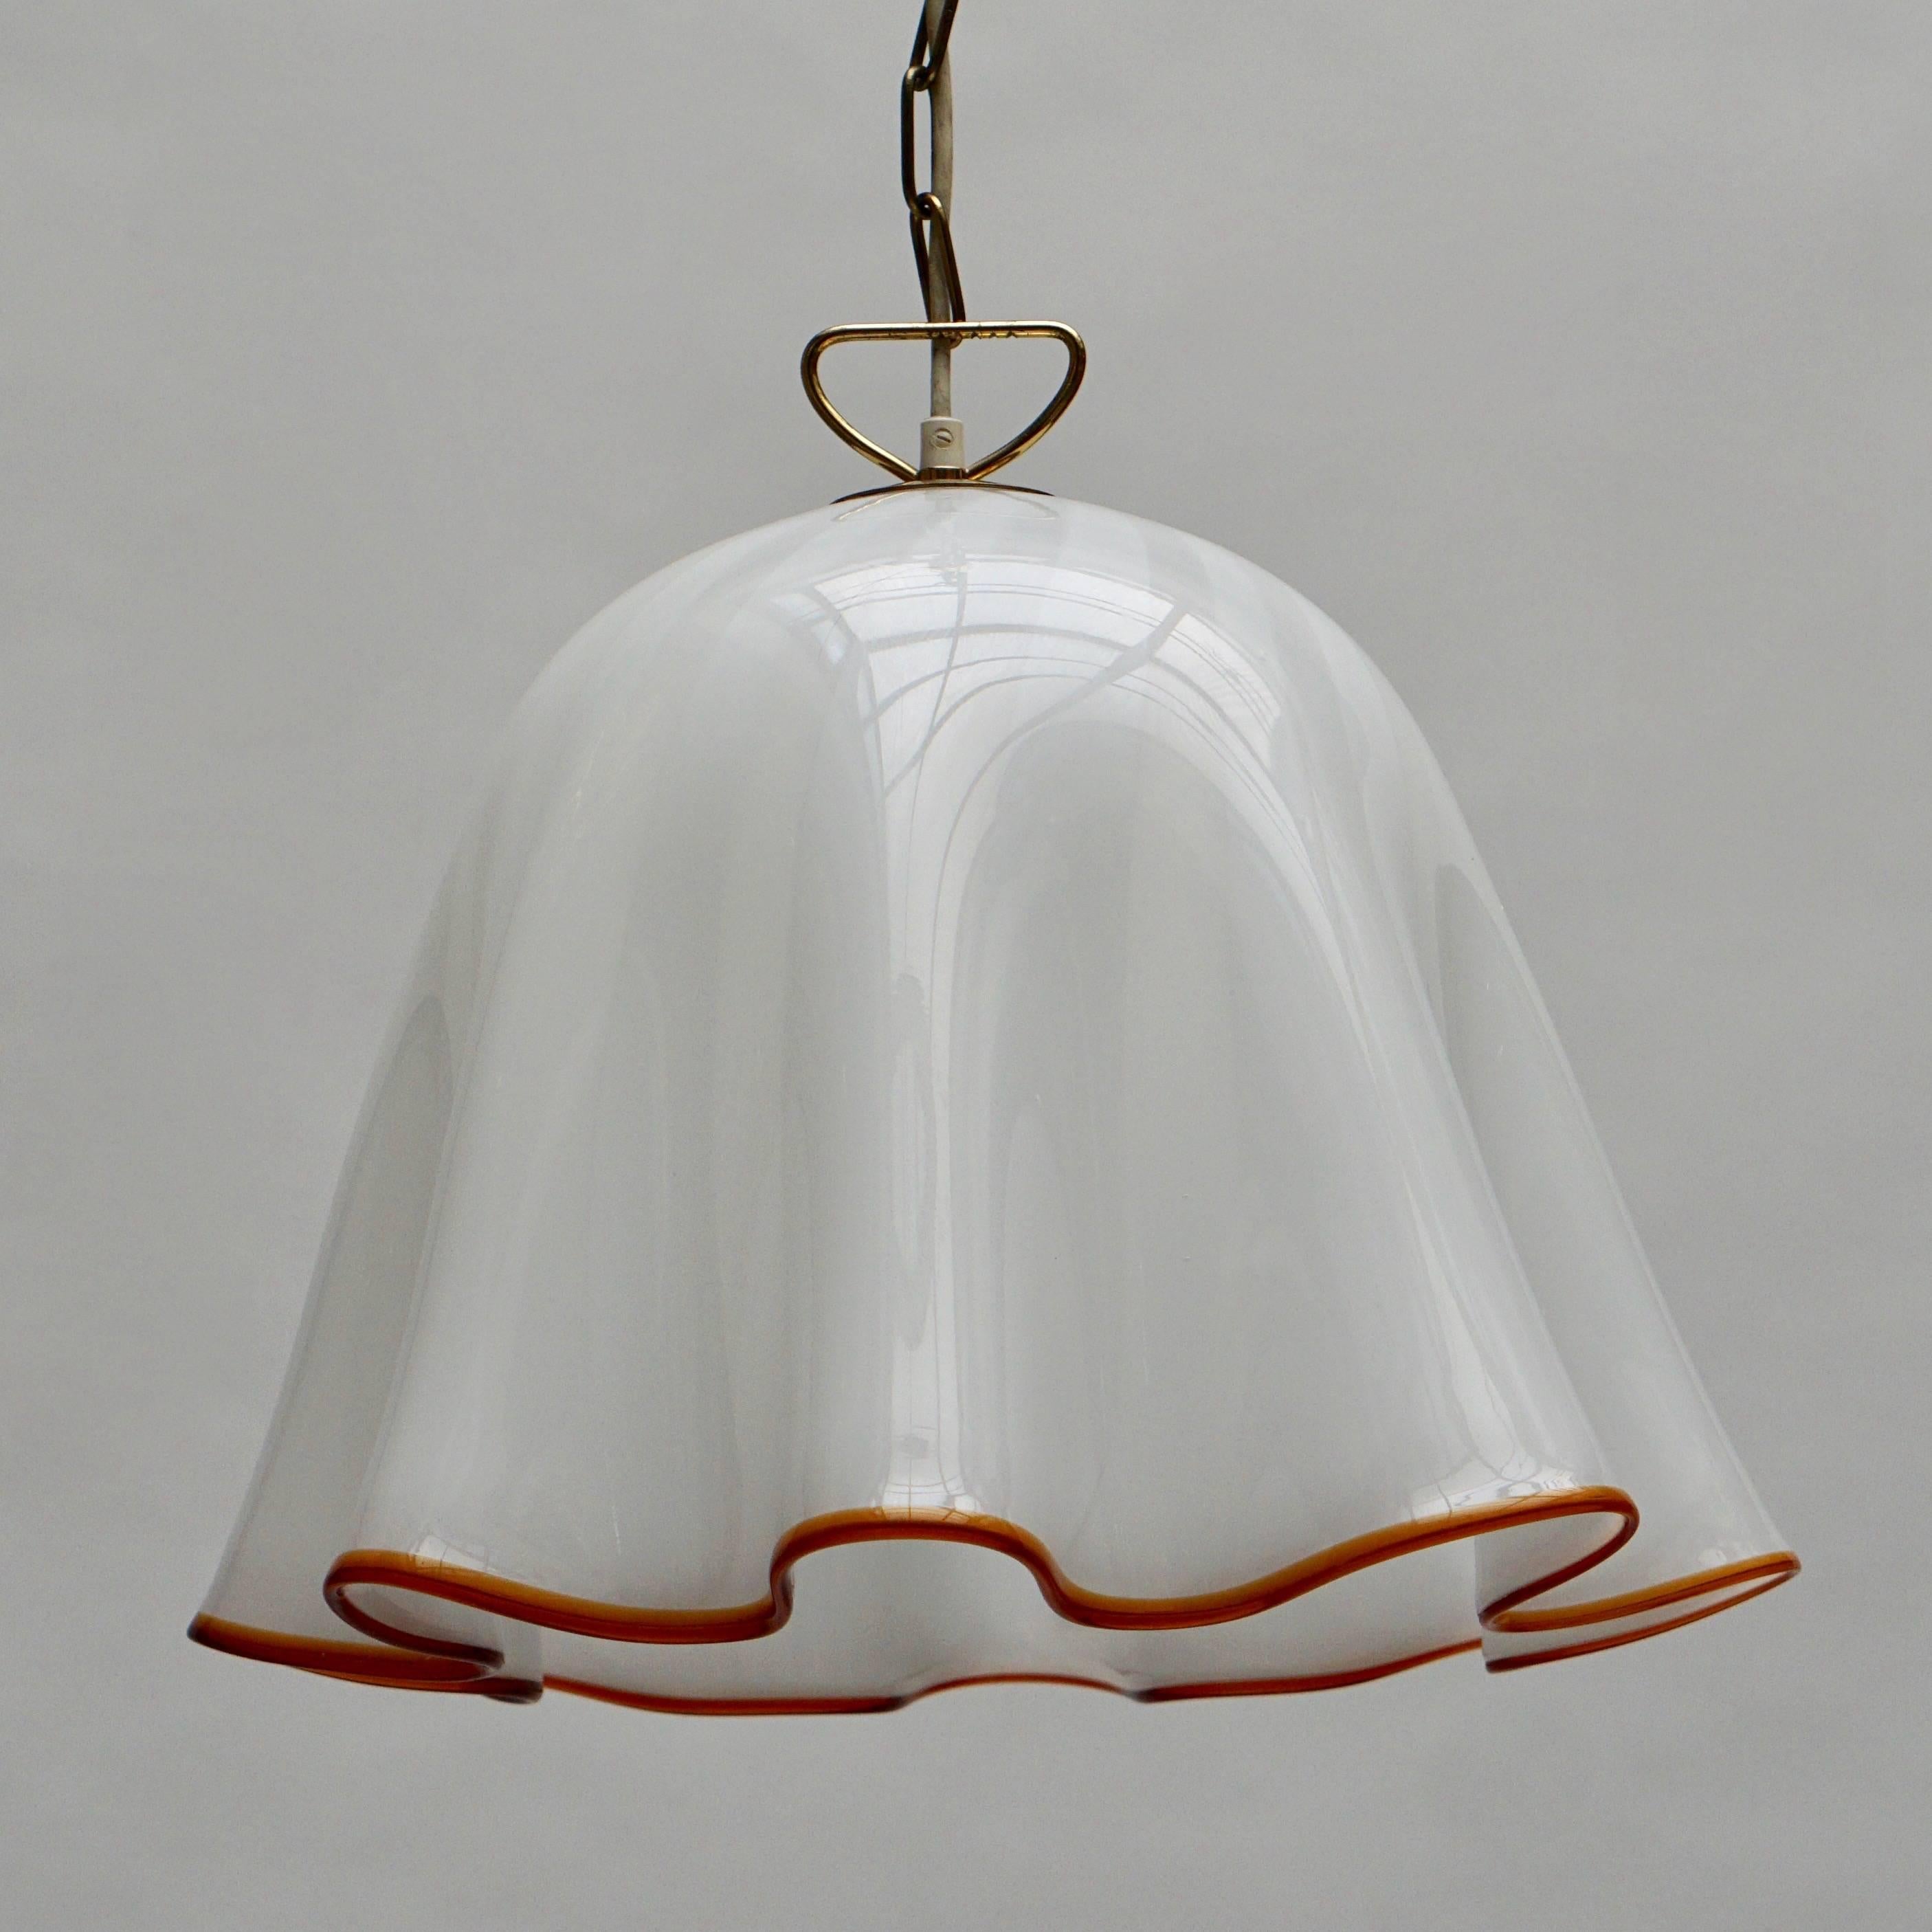 Italian Murano glass pendant light.
Height fixture: 40 cm.
Diameter: 48 cm.
Total height: 90 cm.